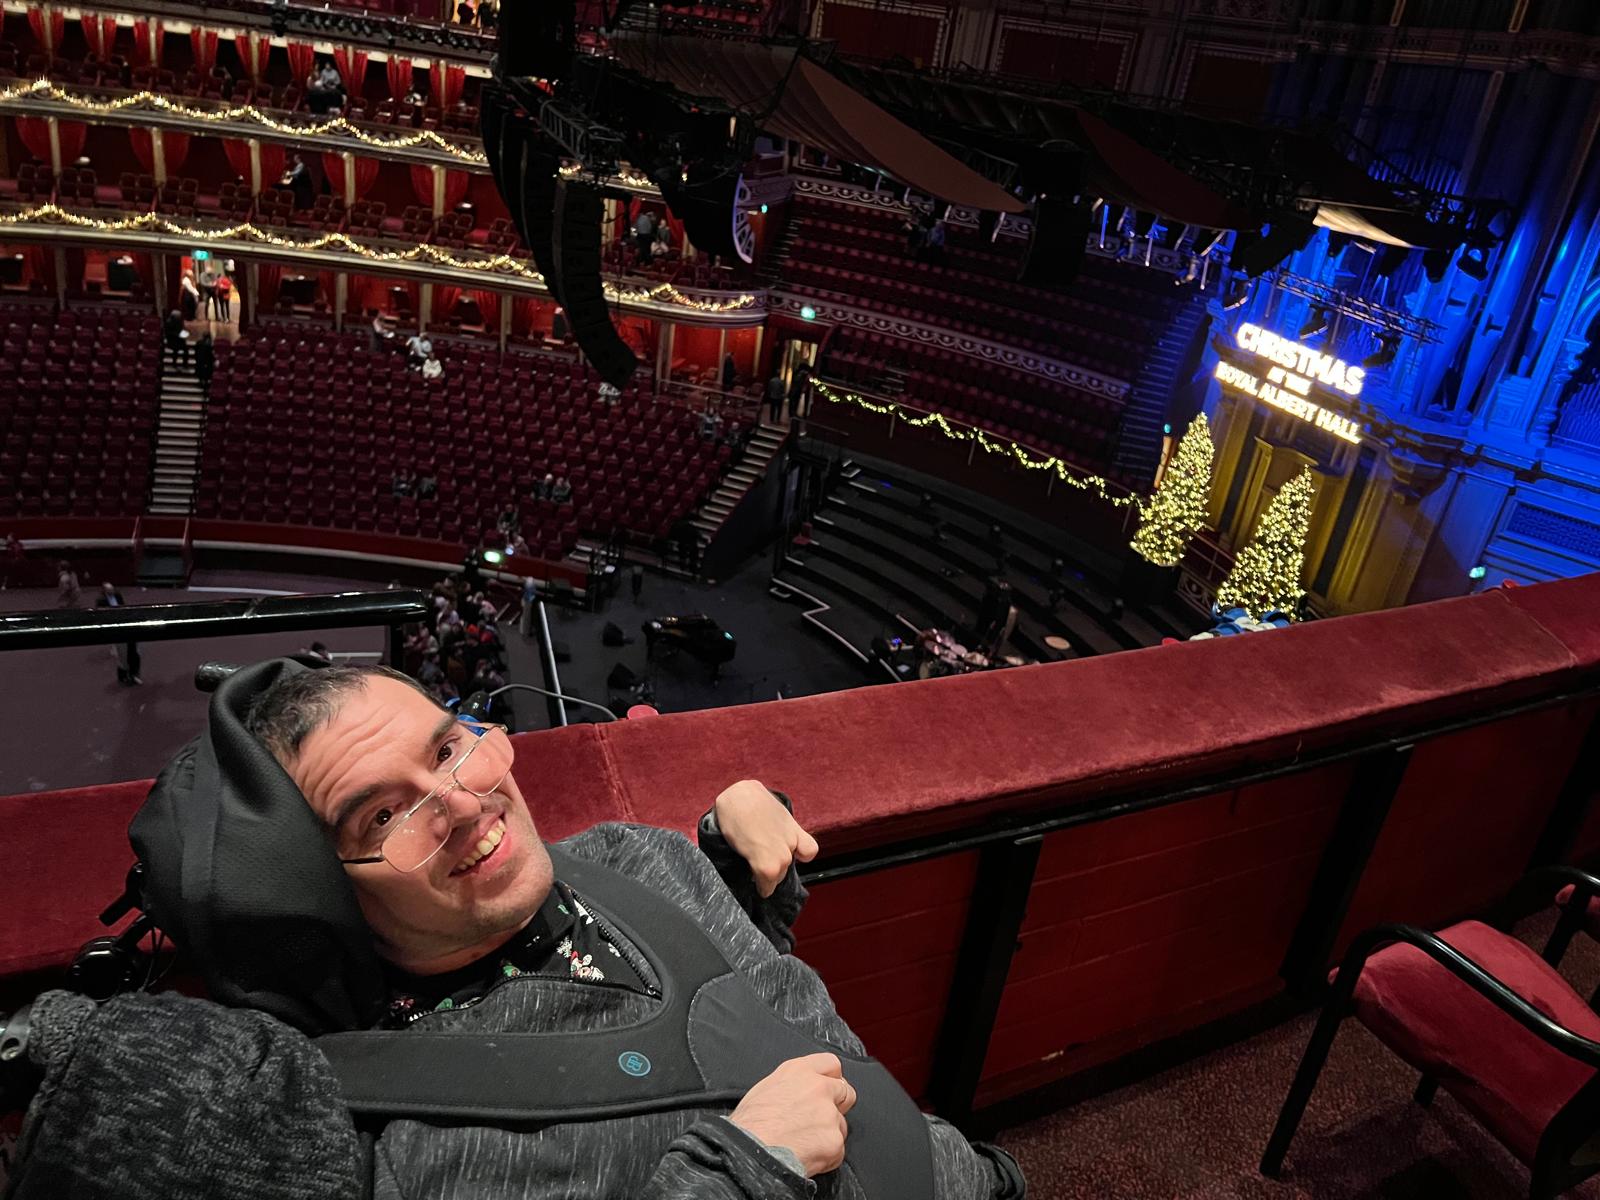 ABOVE: Dan at the Royal Albert Hall